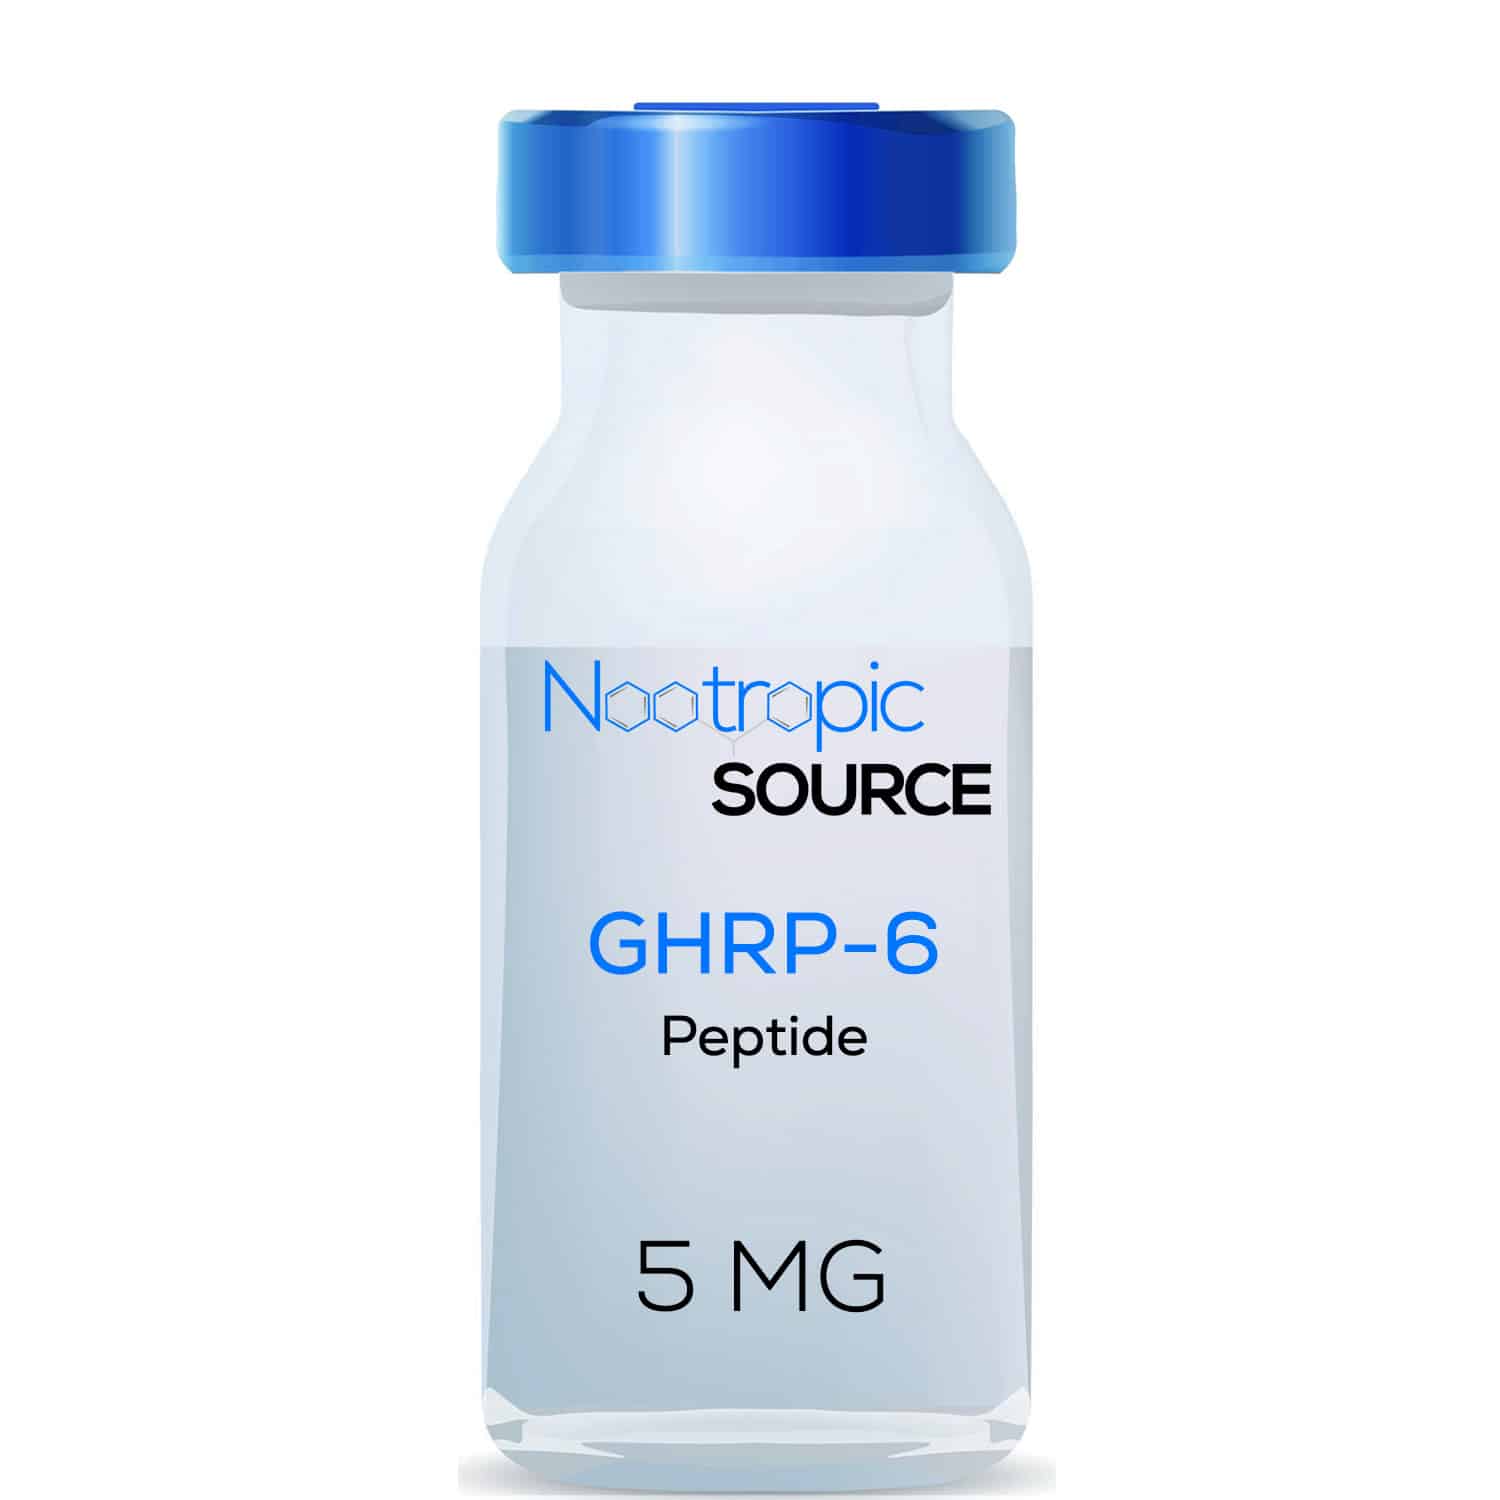 GHRP-6 Peptide